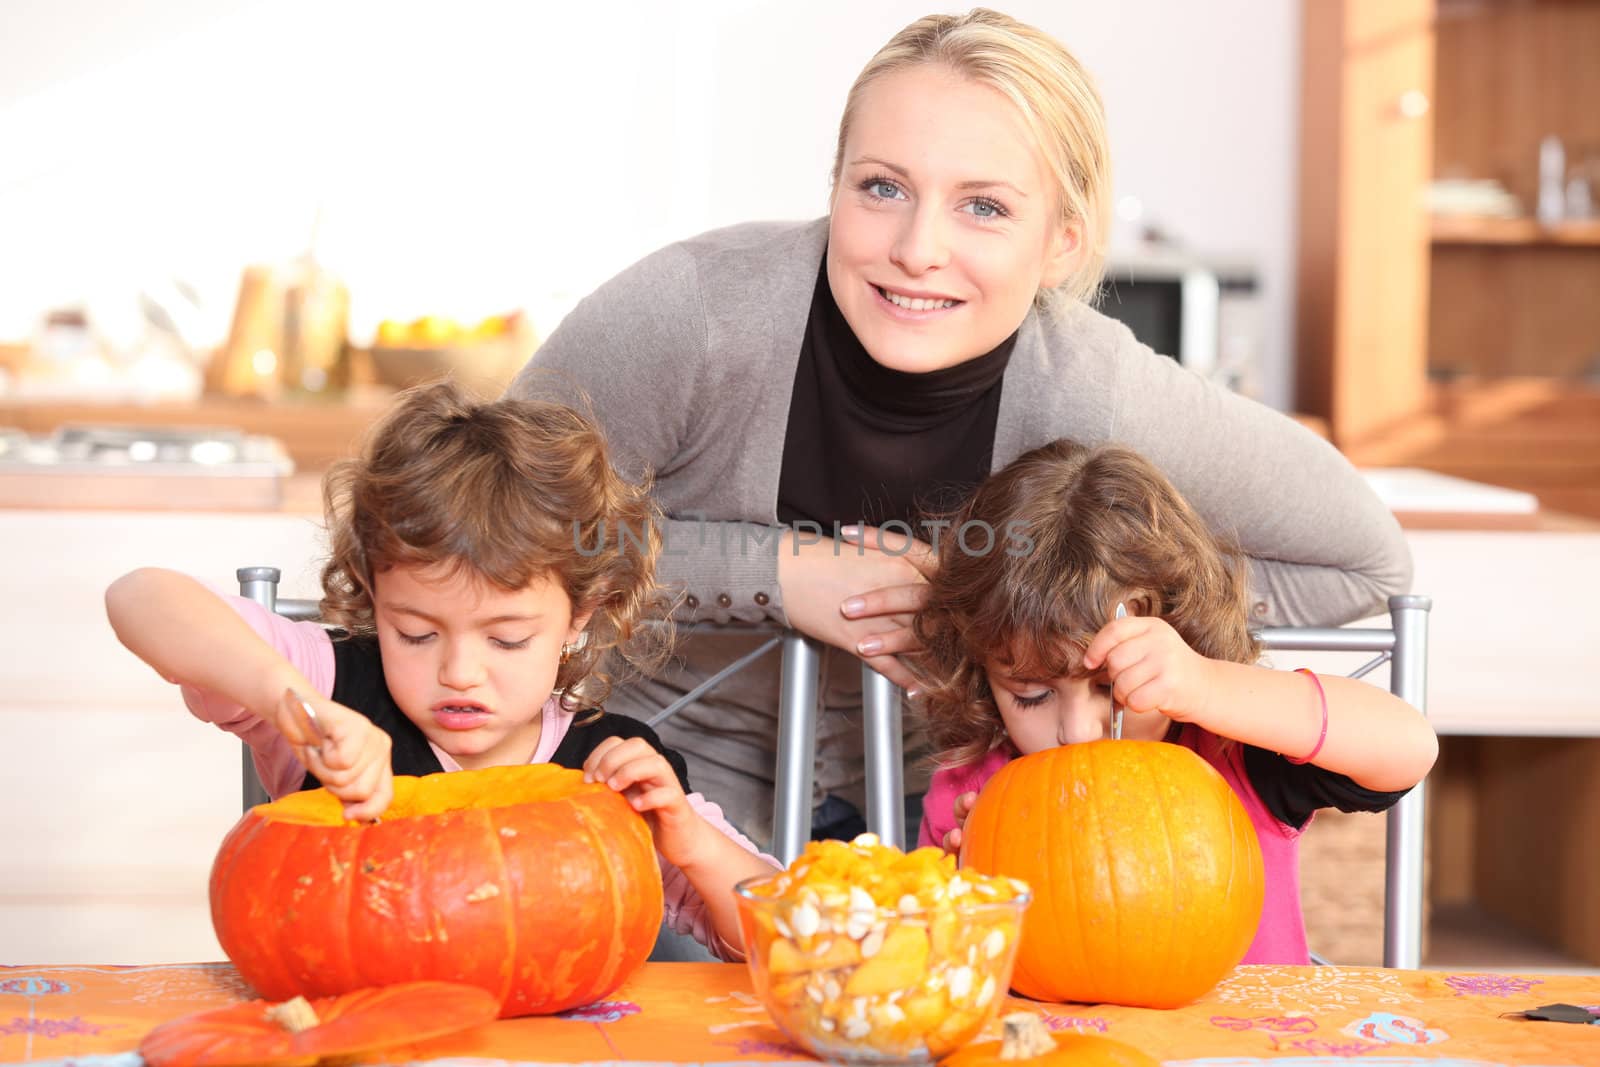 Mother and child preparing pumpkin